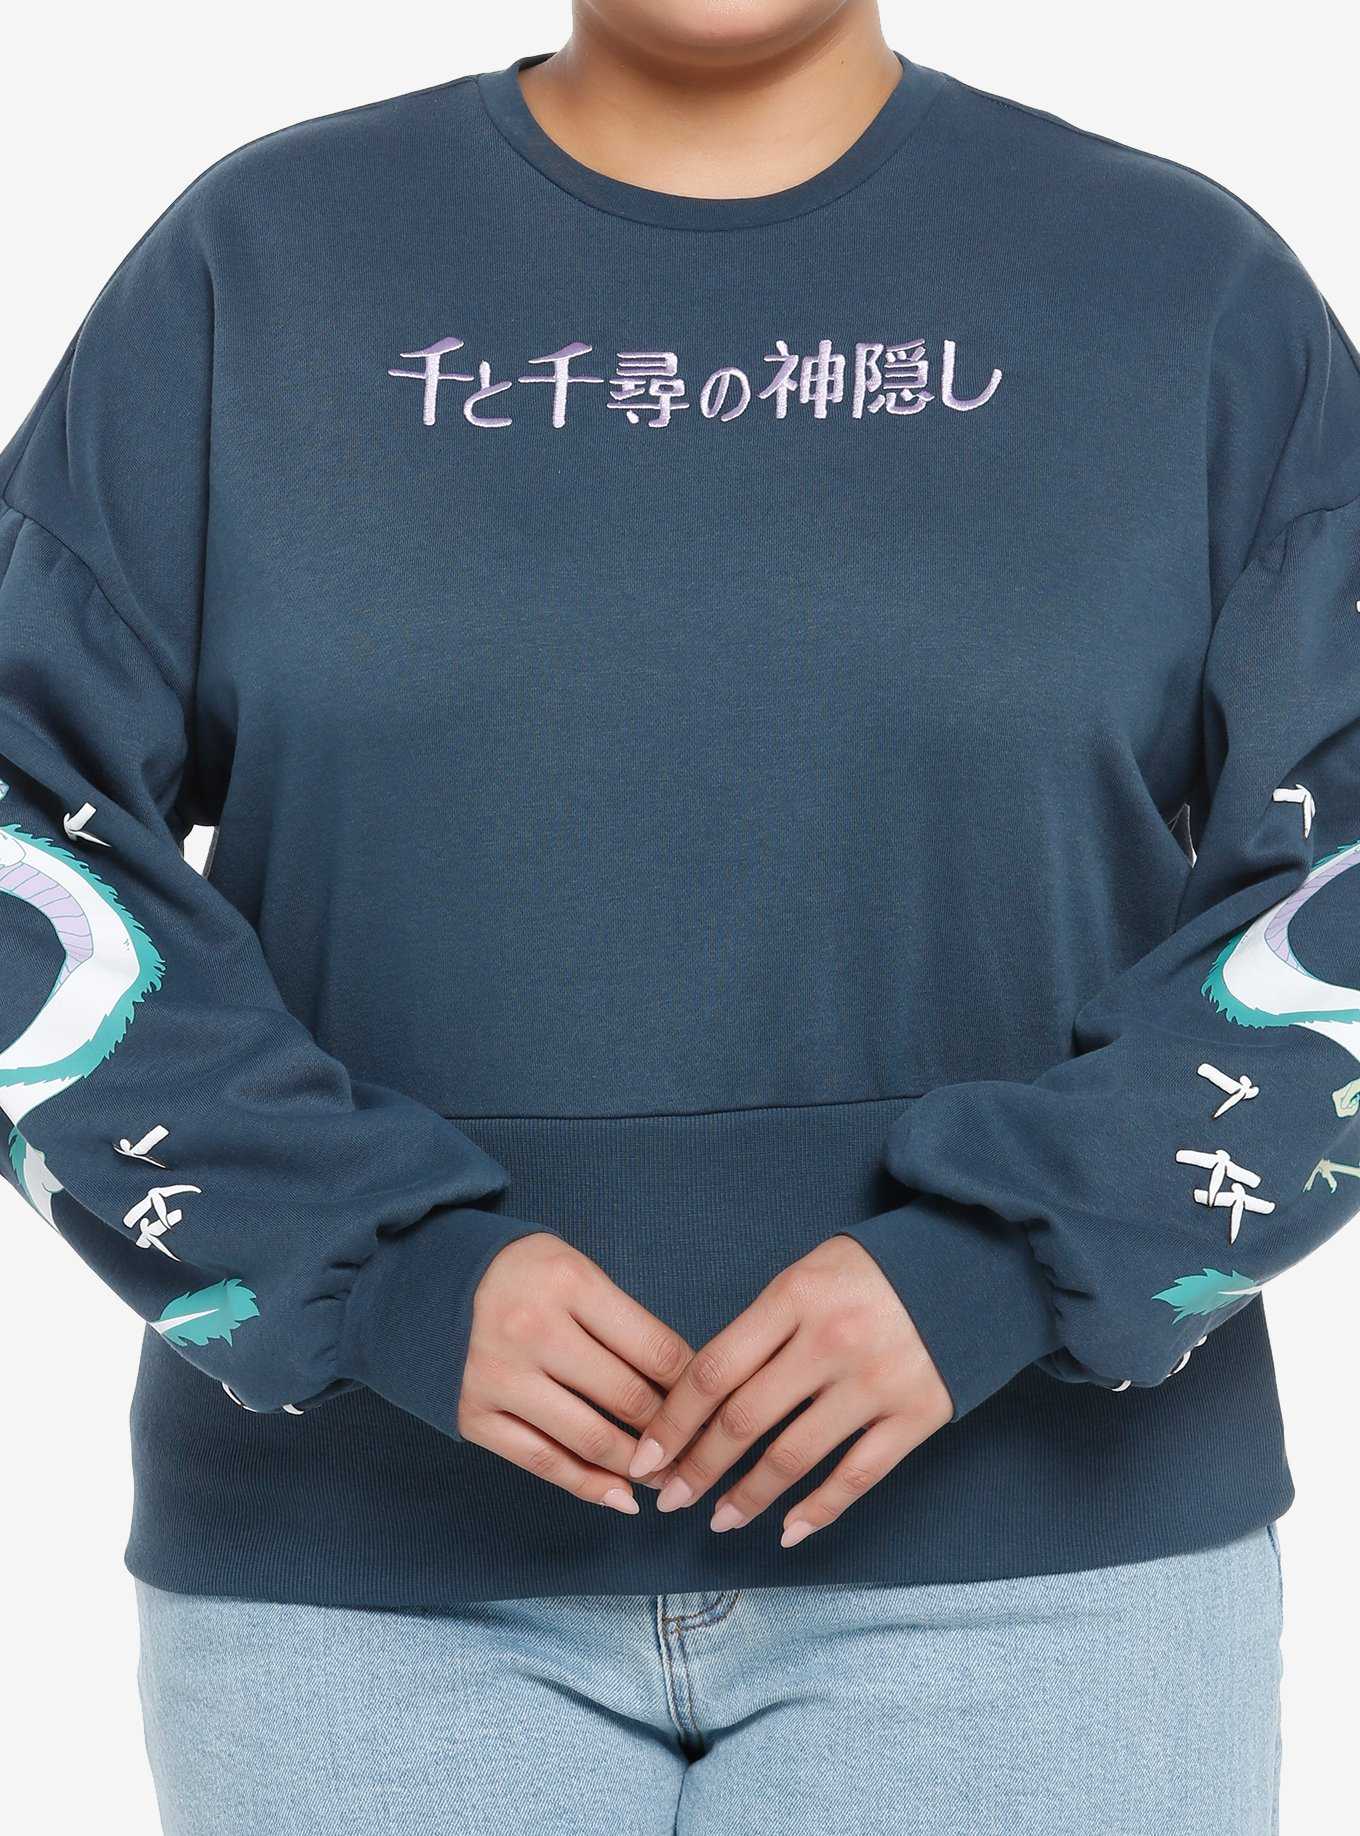 Her Universe Studio Ghibli Spirited Away Haku Embroidered Puff Ink Sweatshirt Plus Size, , hi-res